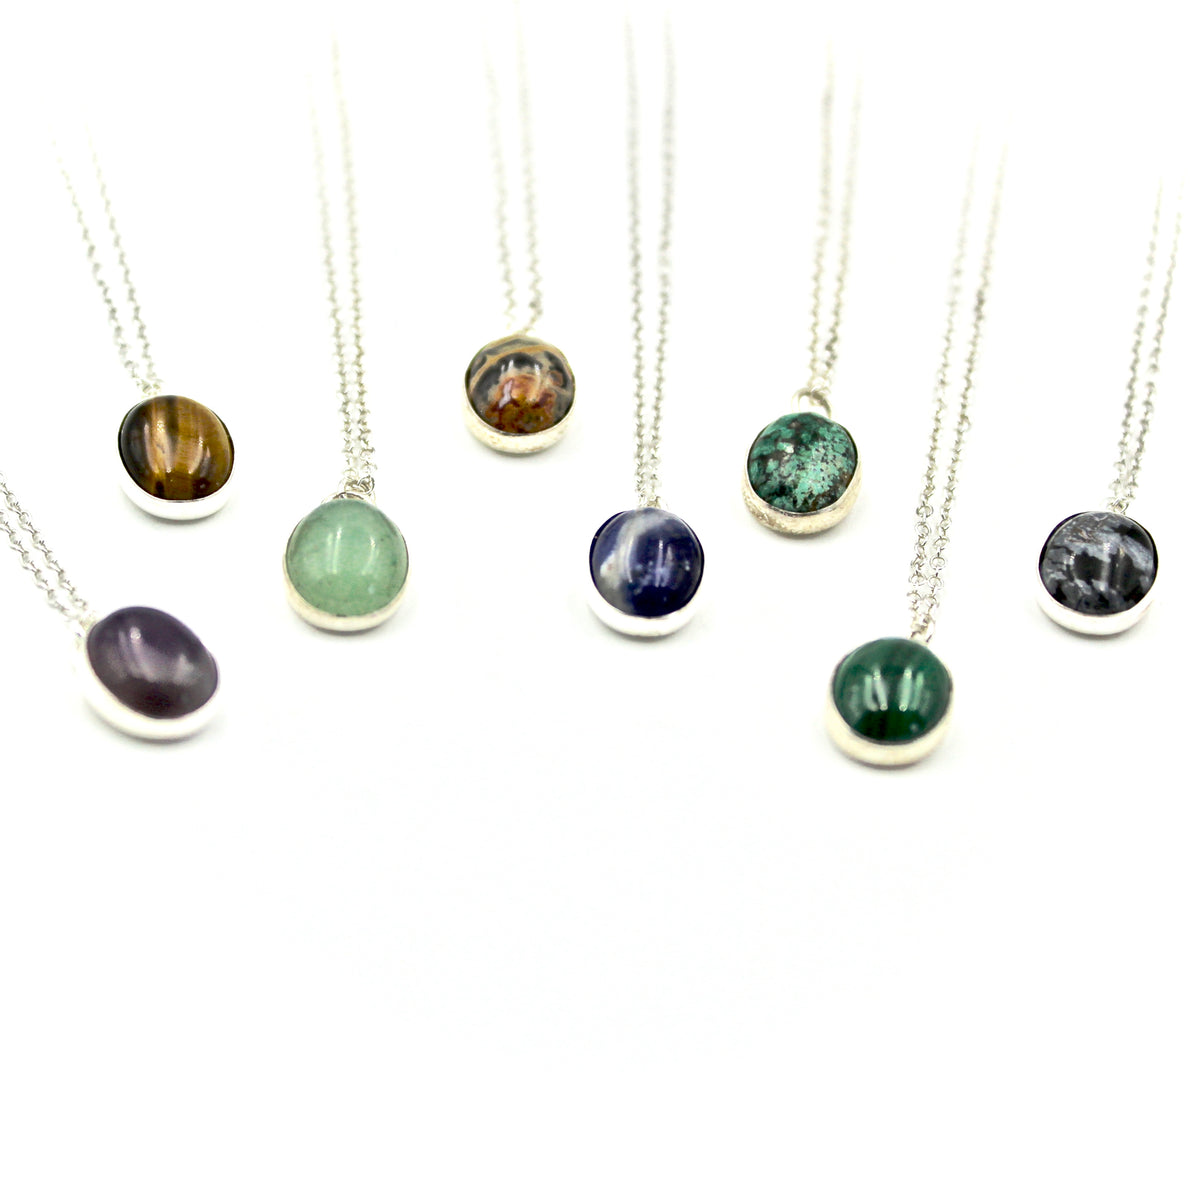 Oval Gemstone Necklace - Sterling Silver